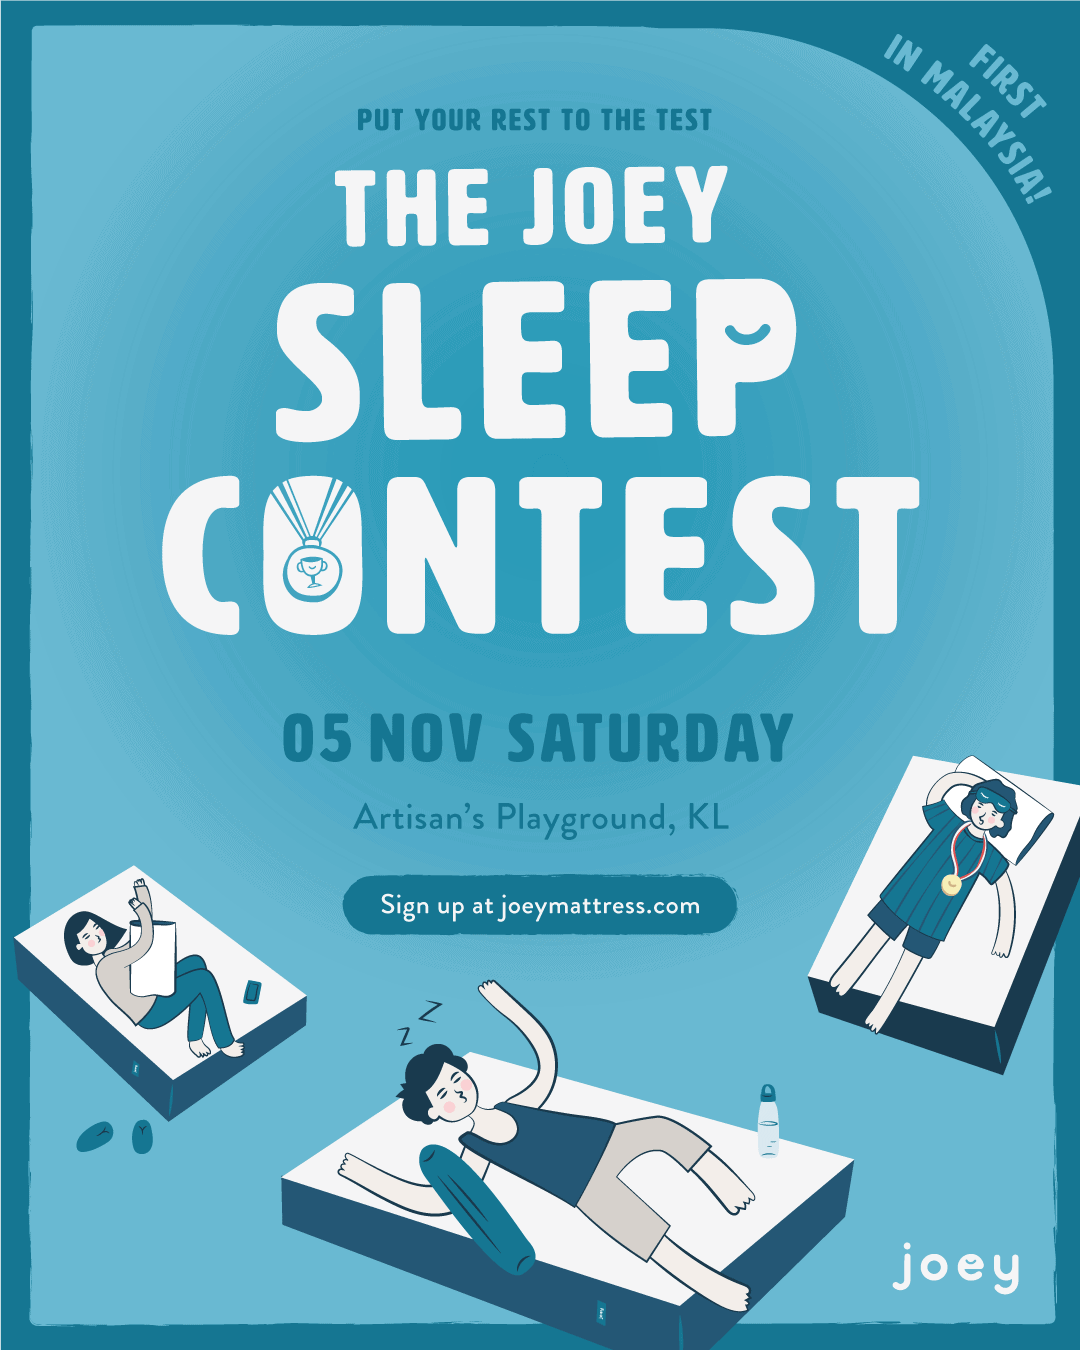 The Joey Sleep Contest